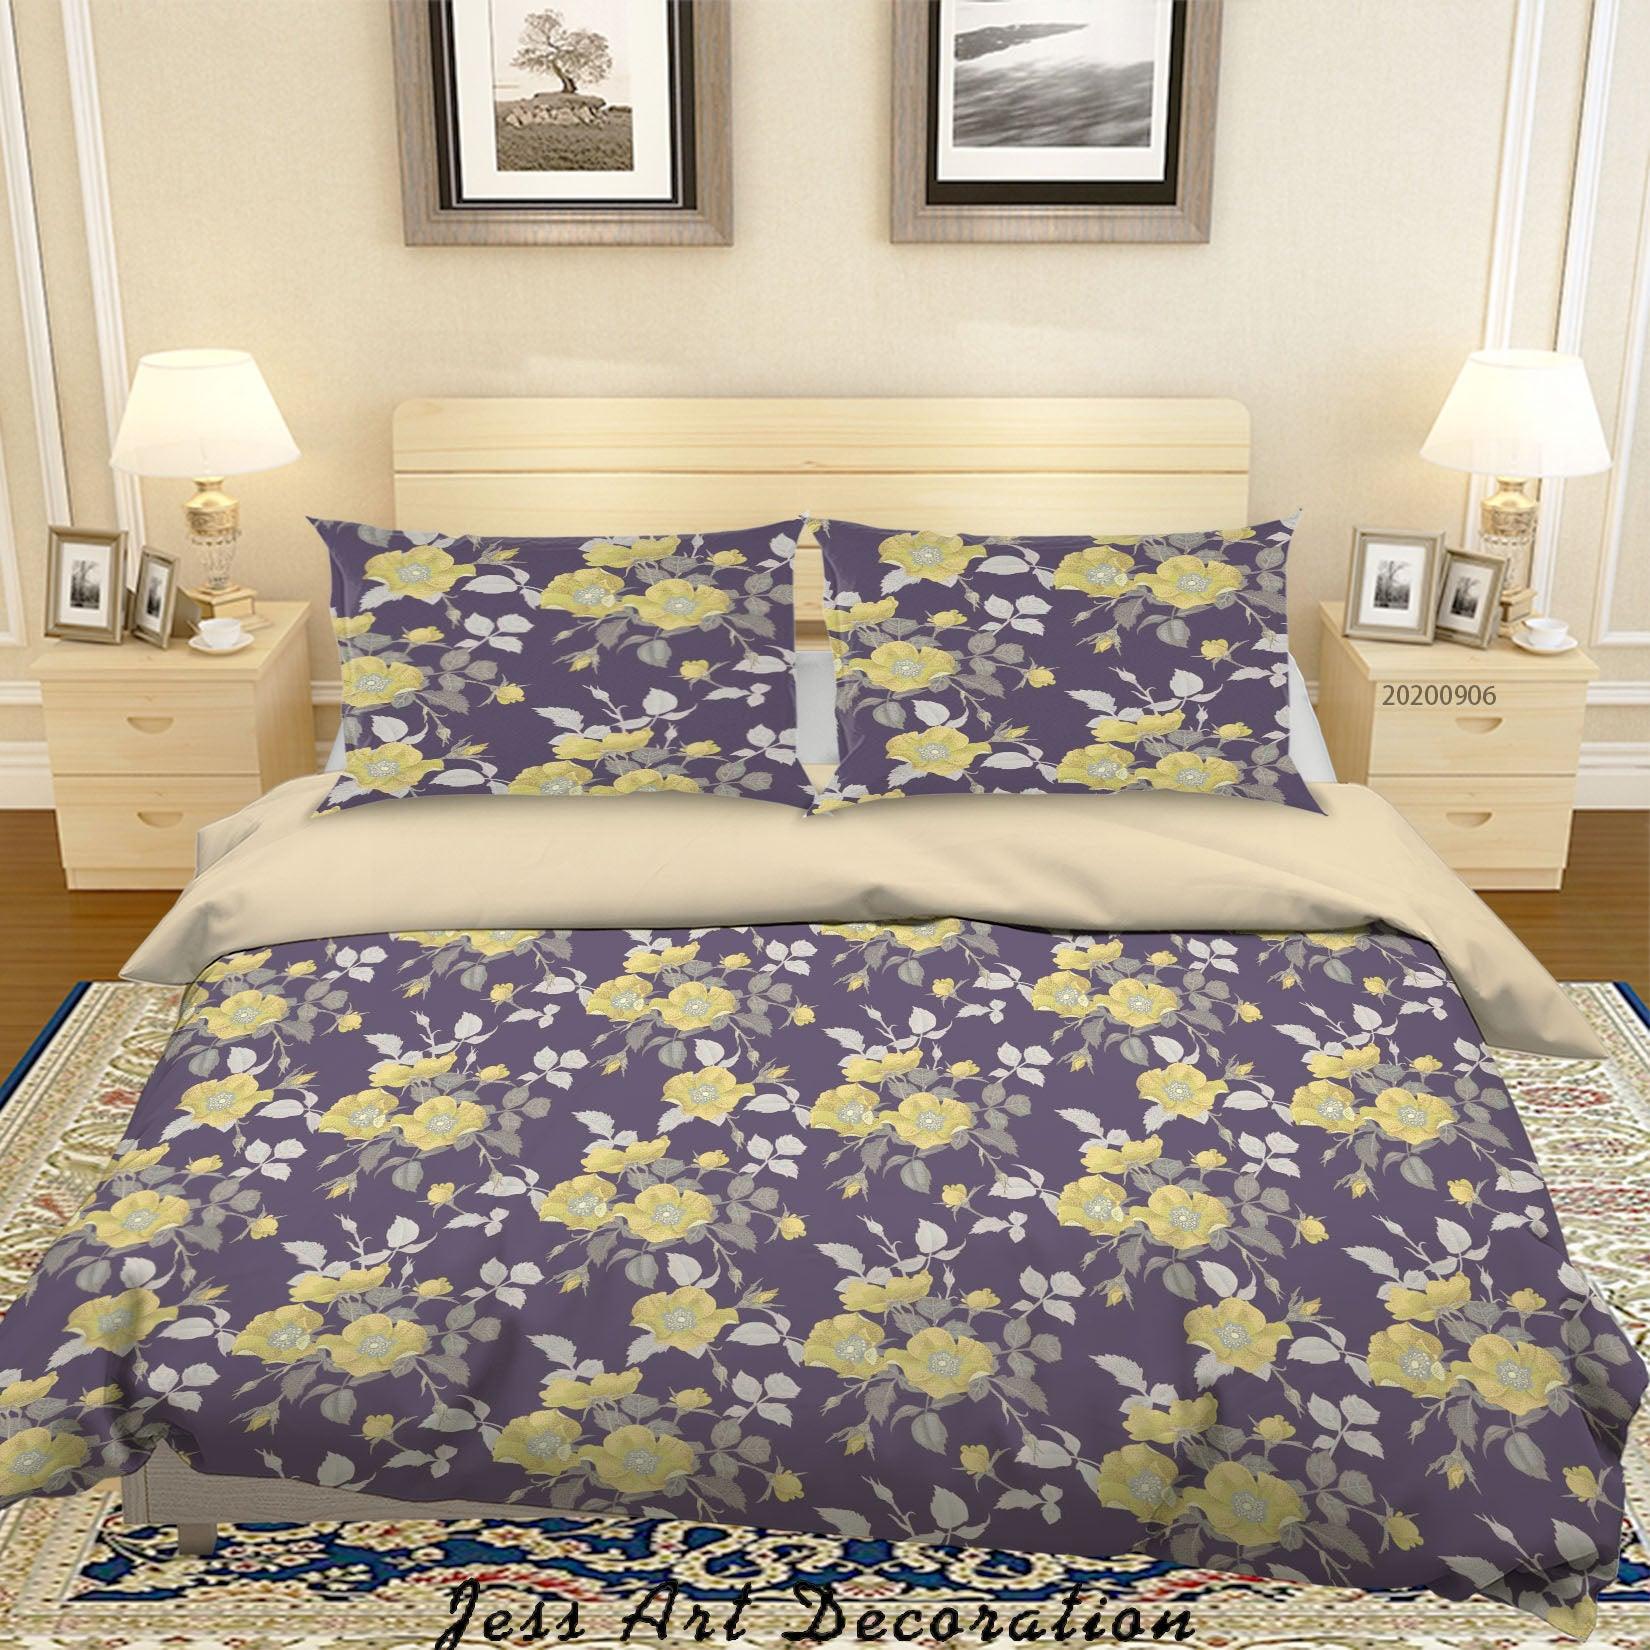 3D Vintage Yellow Leaves Pattern Quilt Cover Set Bedding Set Duvet Cover Pillowcases WJ 3618- Jess Art Decoration